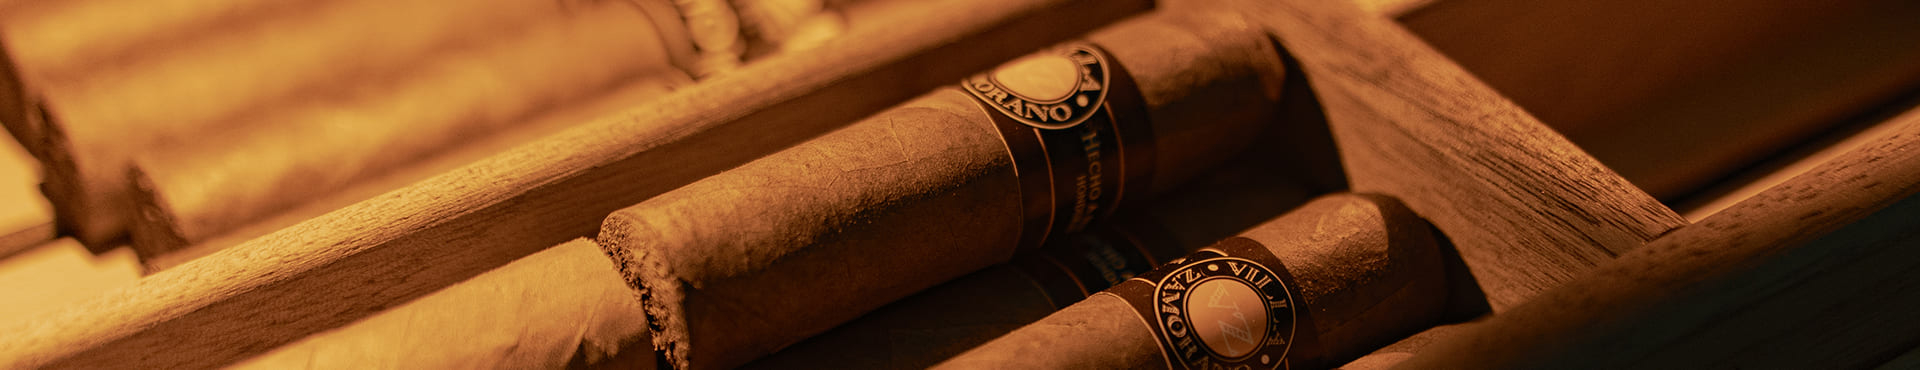 Humidor - Zigarren lagern in Perfektion.